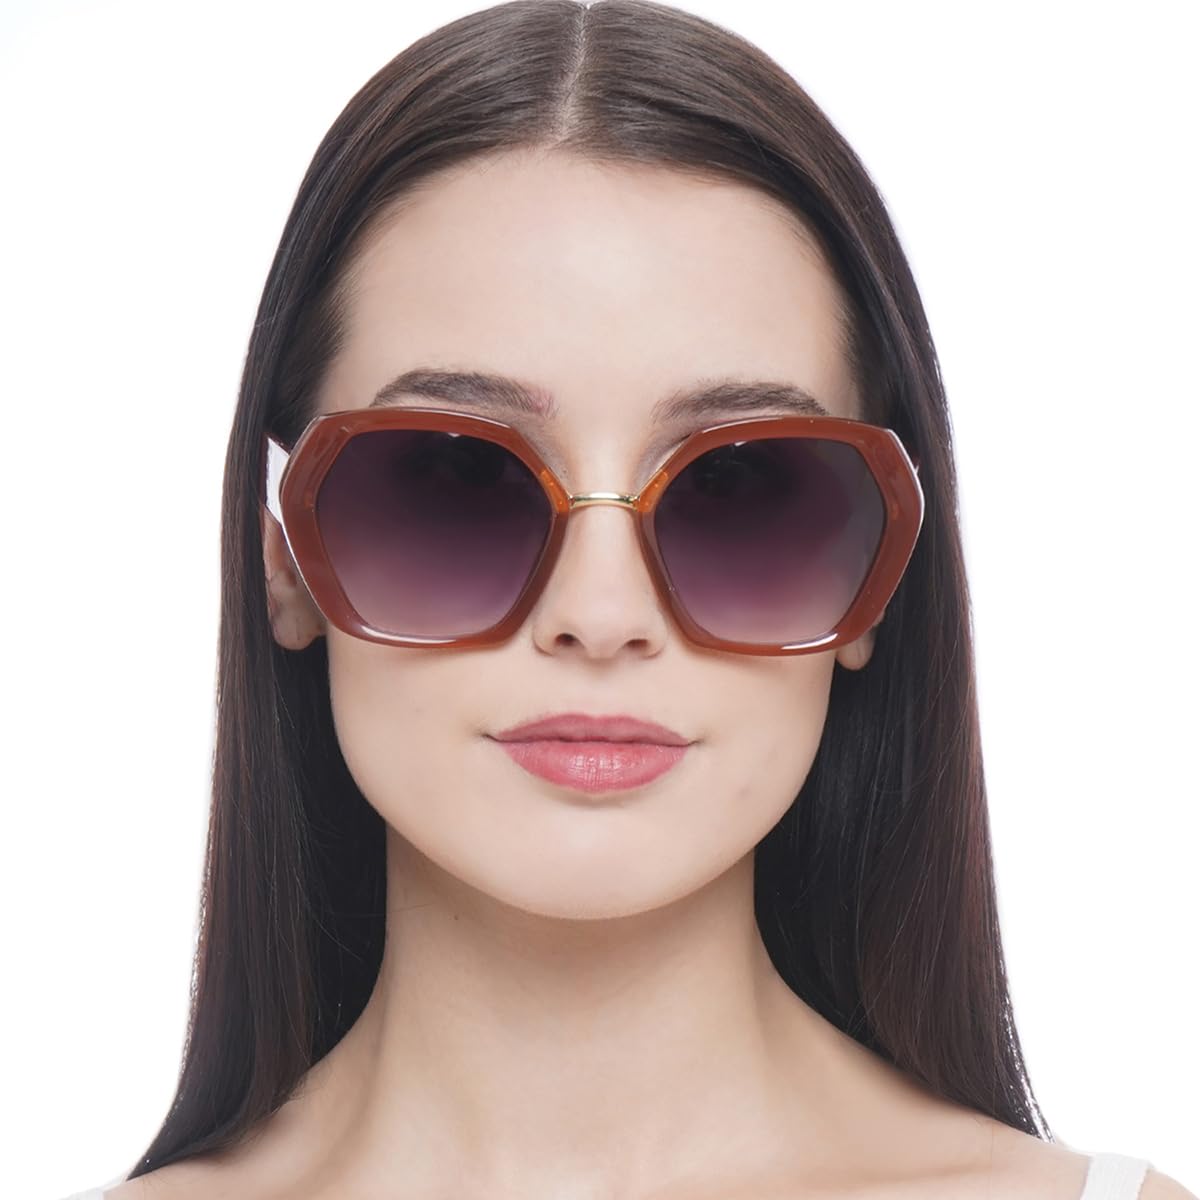 Carlton London Brown & Gold Toned UV Protected Oversized Sunglasses For Women